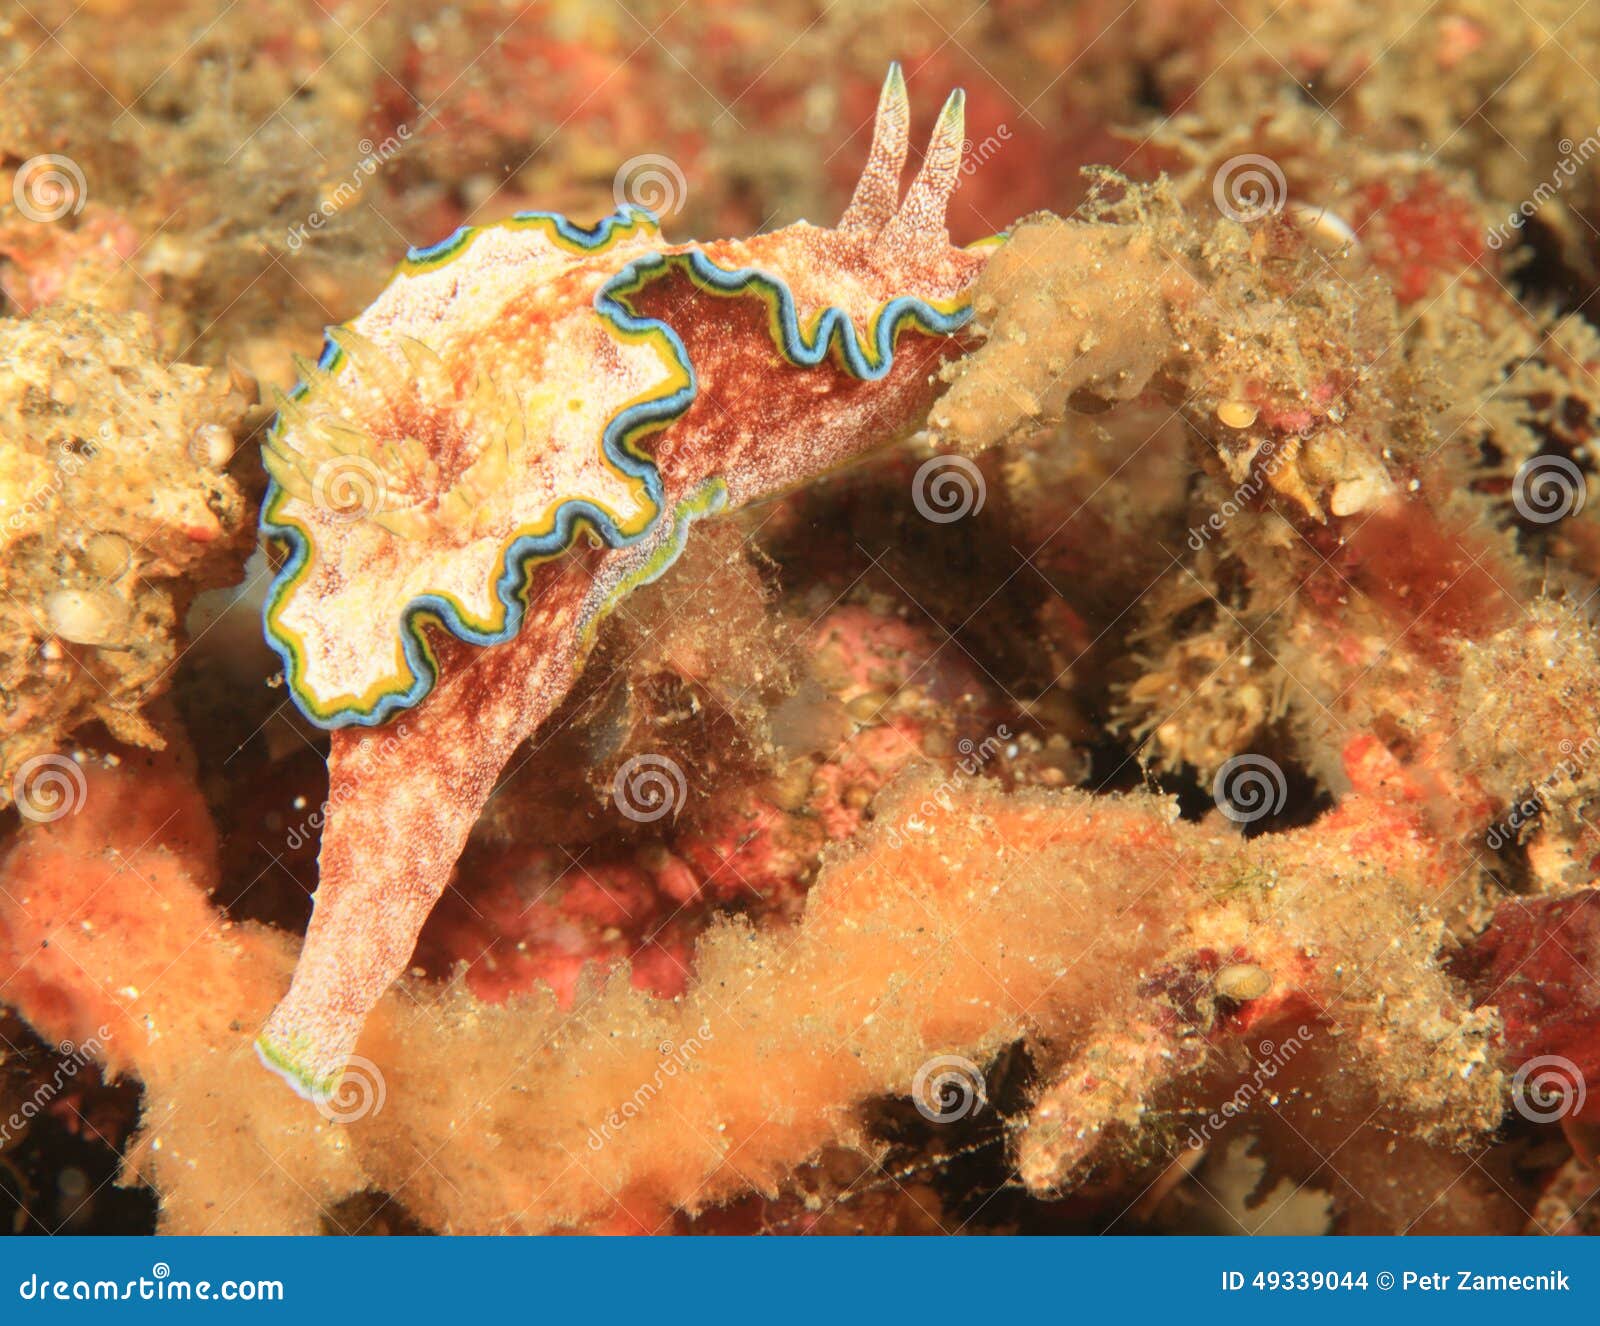 nudibranch - glossodoris cinta